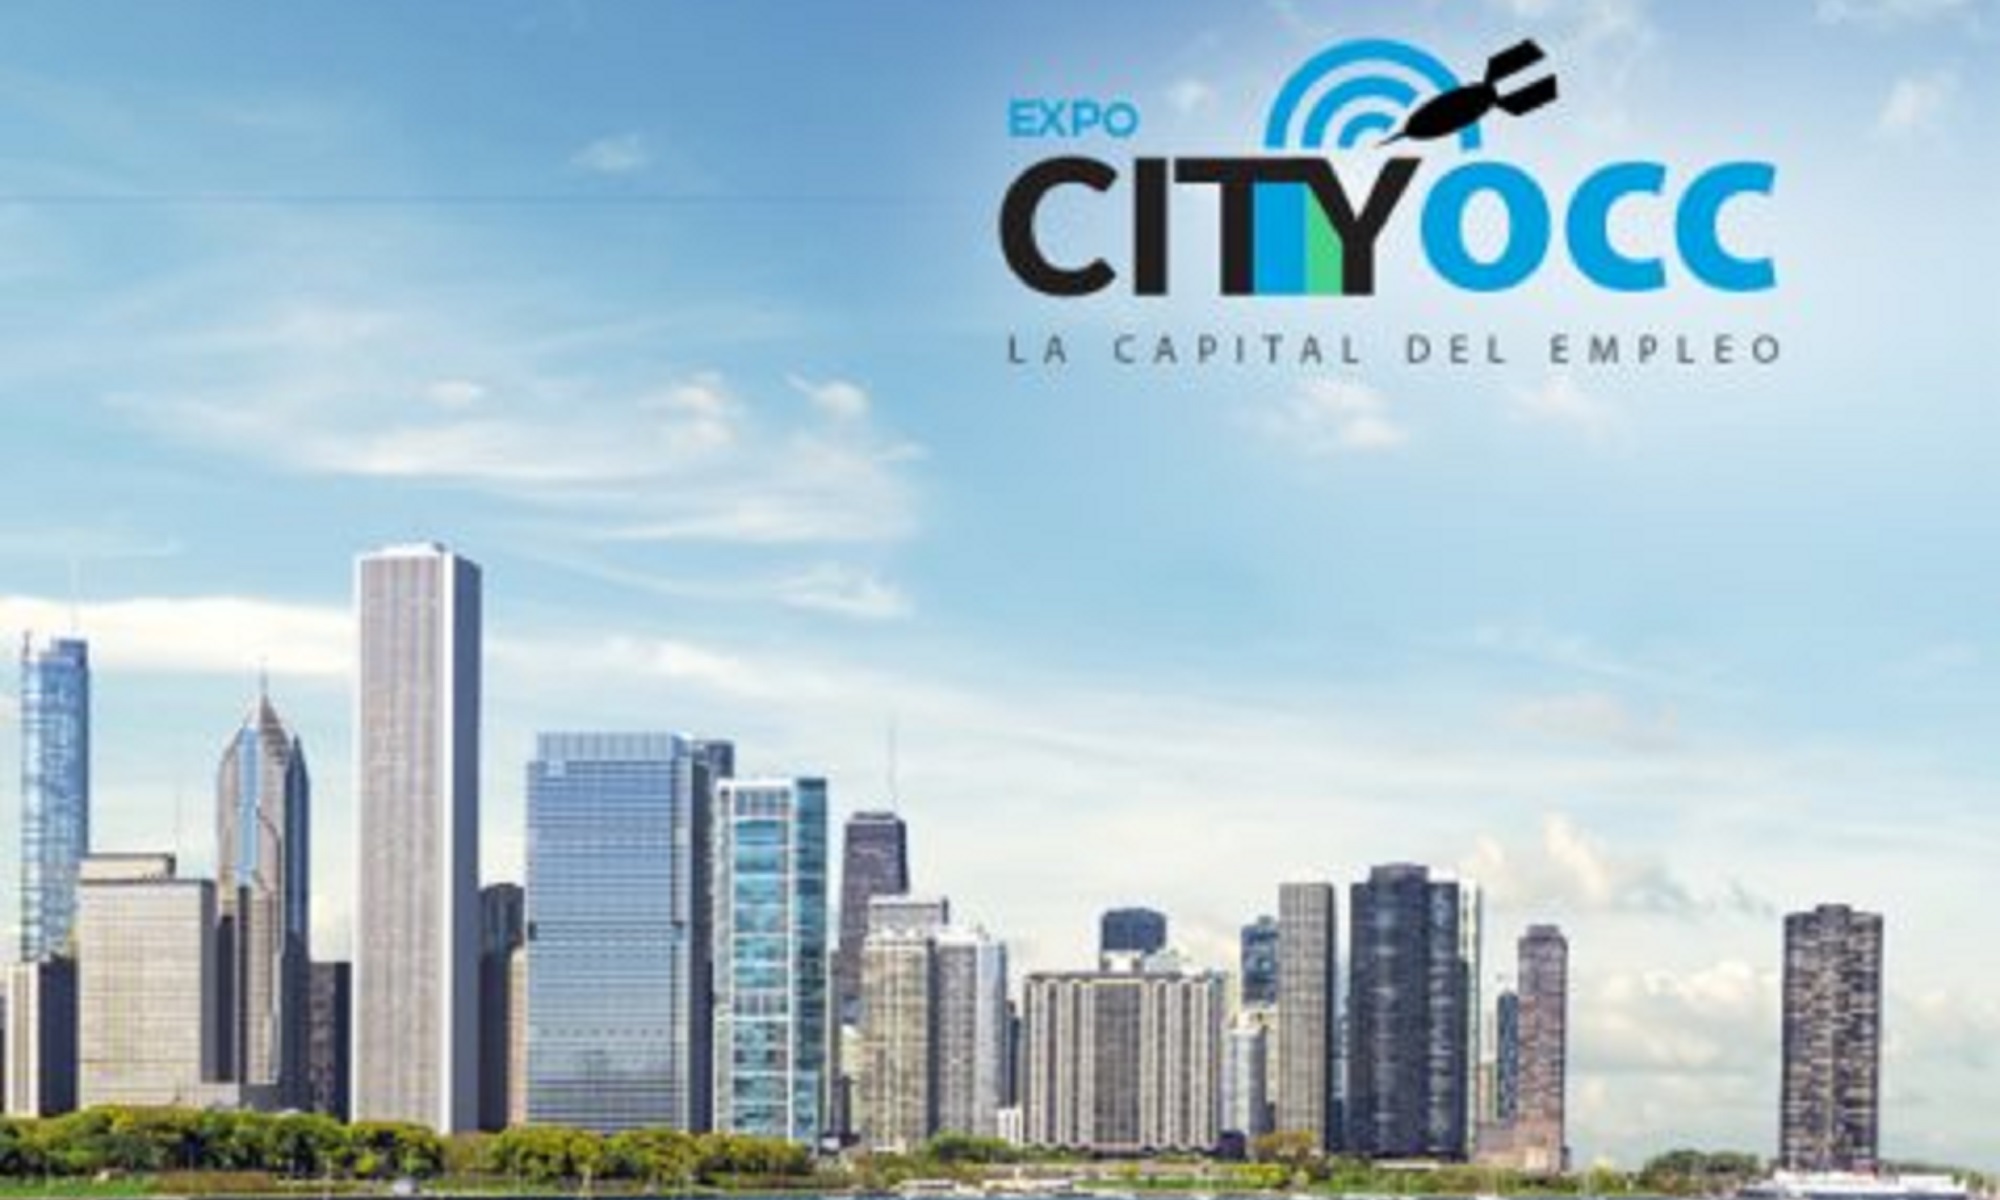 expo city occ